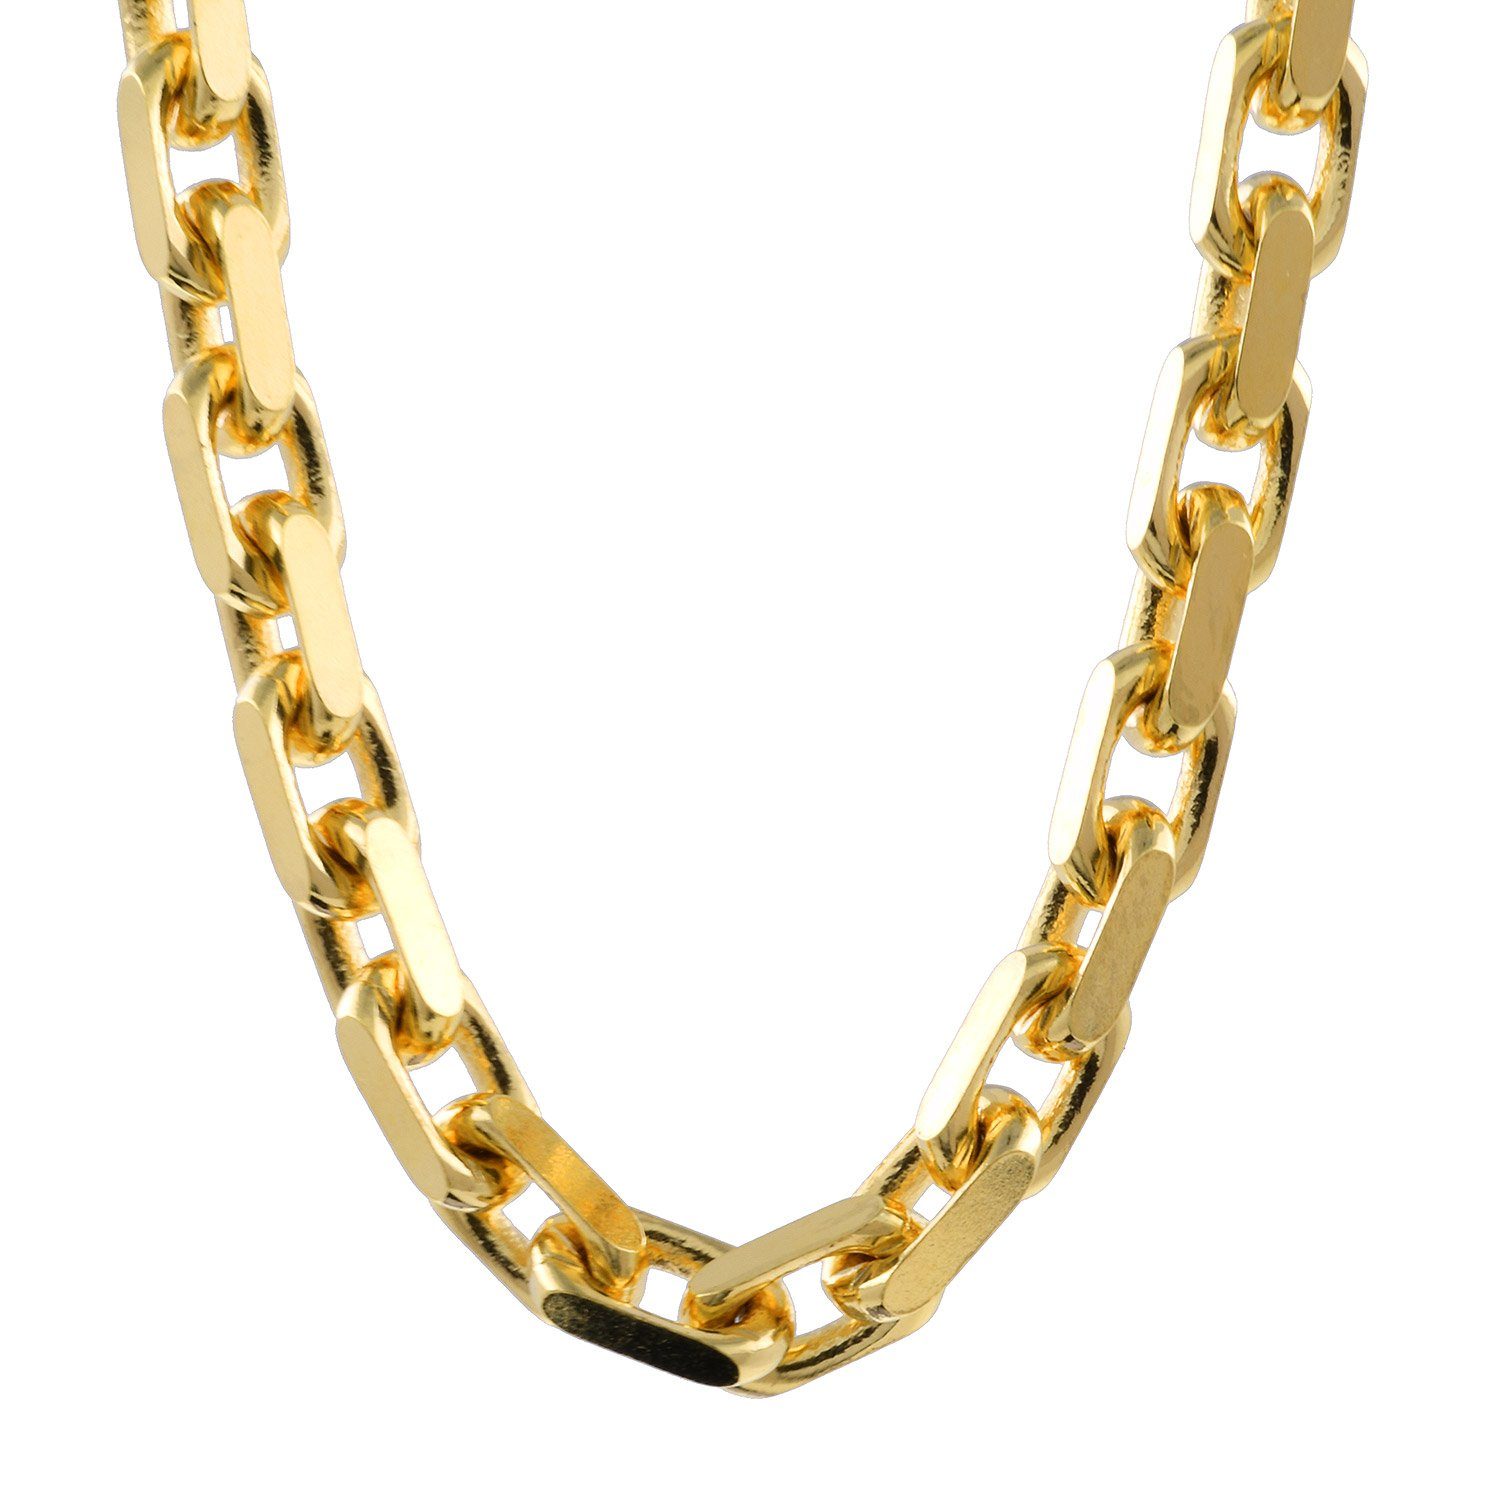 HOPLO Goldkette Ankerkette diamantiert 585 - 14 Karat Gold 3,0 mm  Kettenlänge 45 cm, Made in Germany